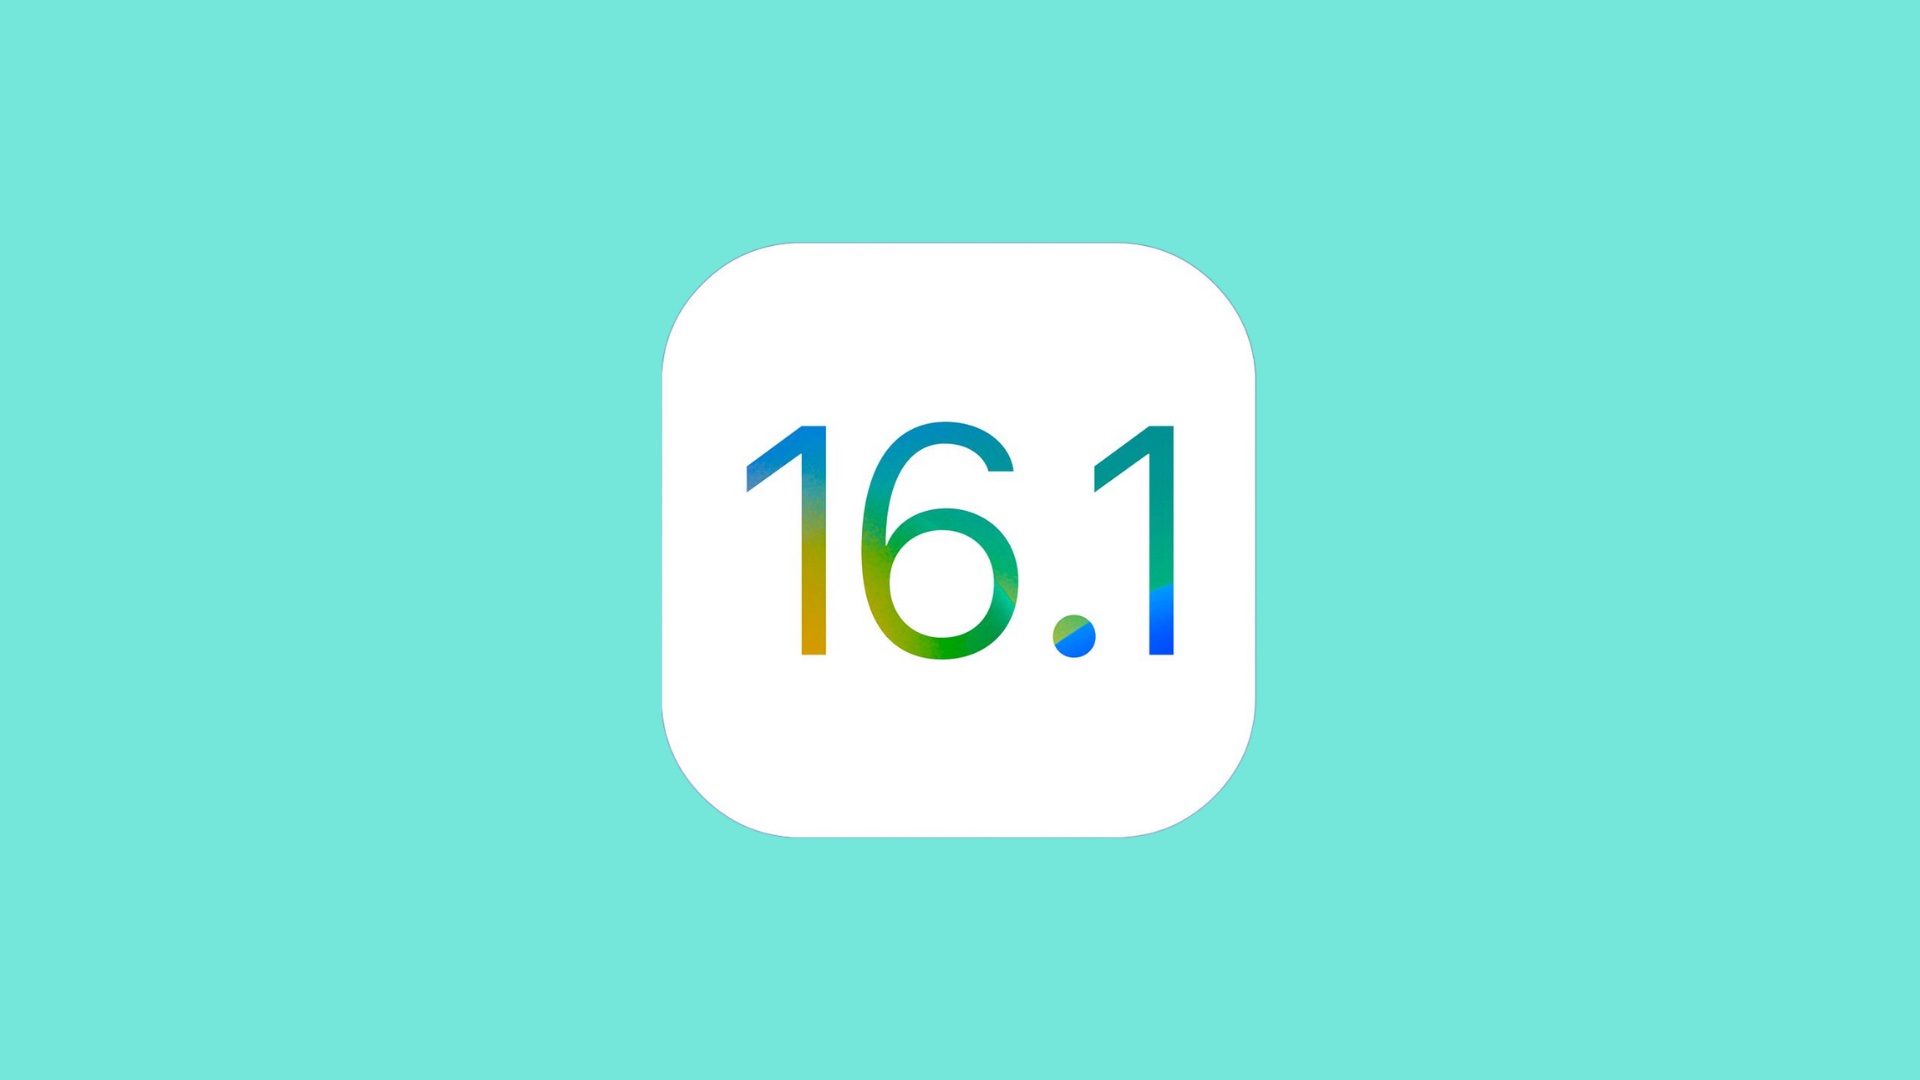 iOS 16.1 Hero Teal